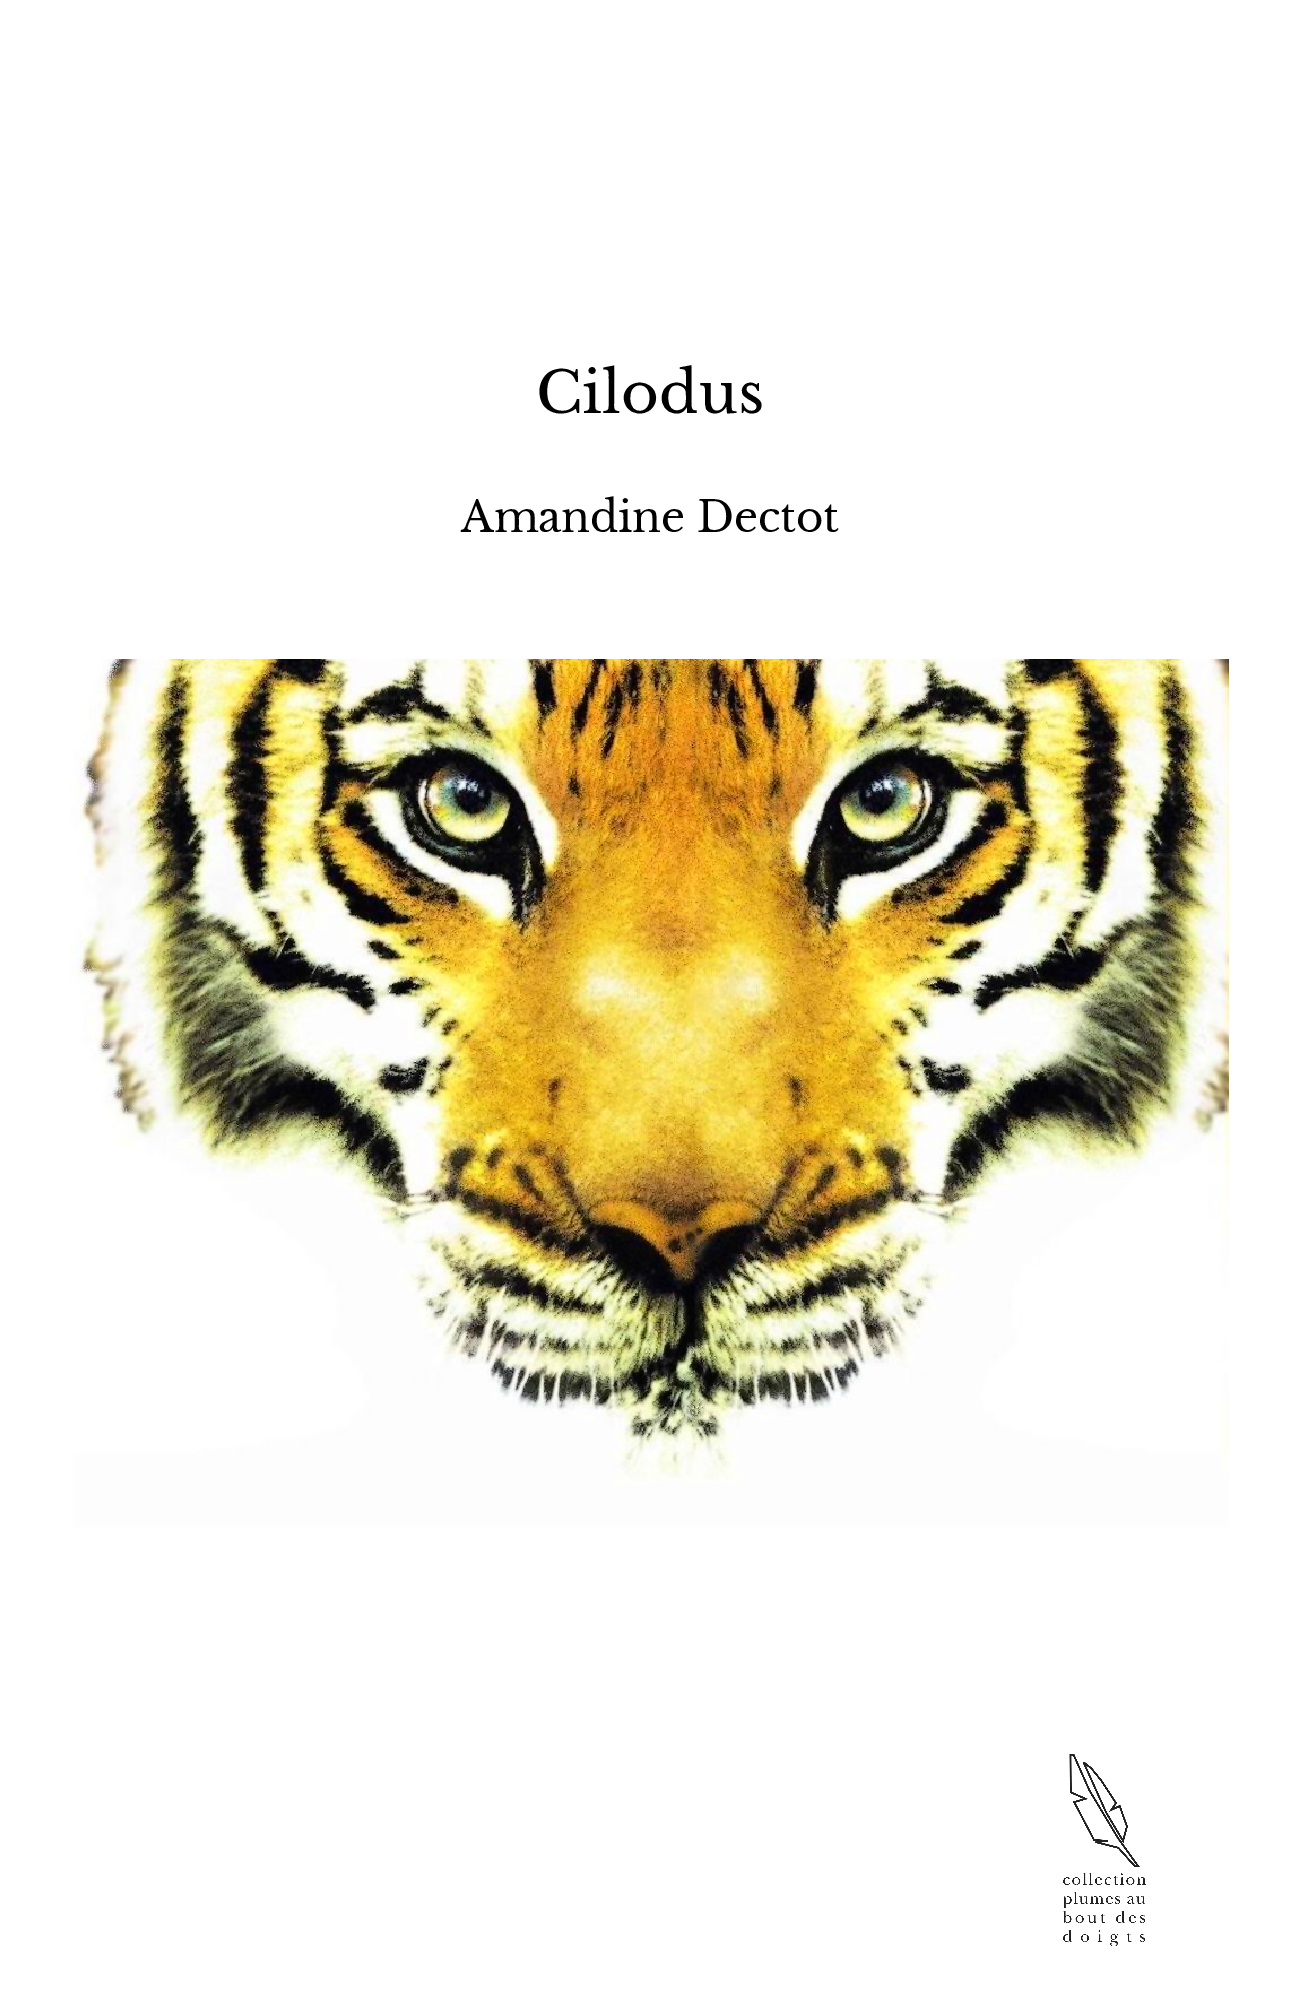 Cilodus